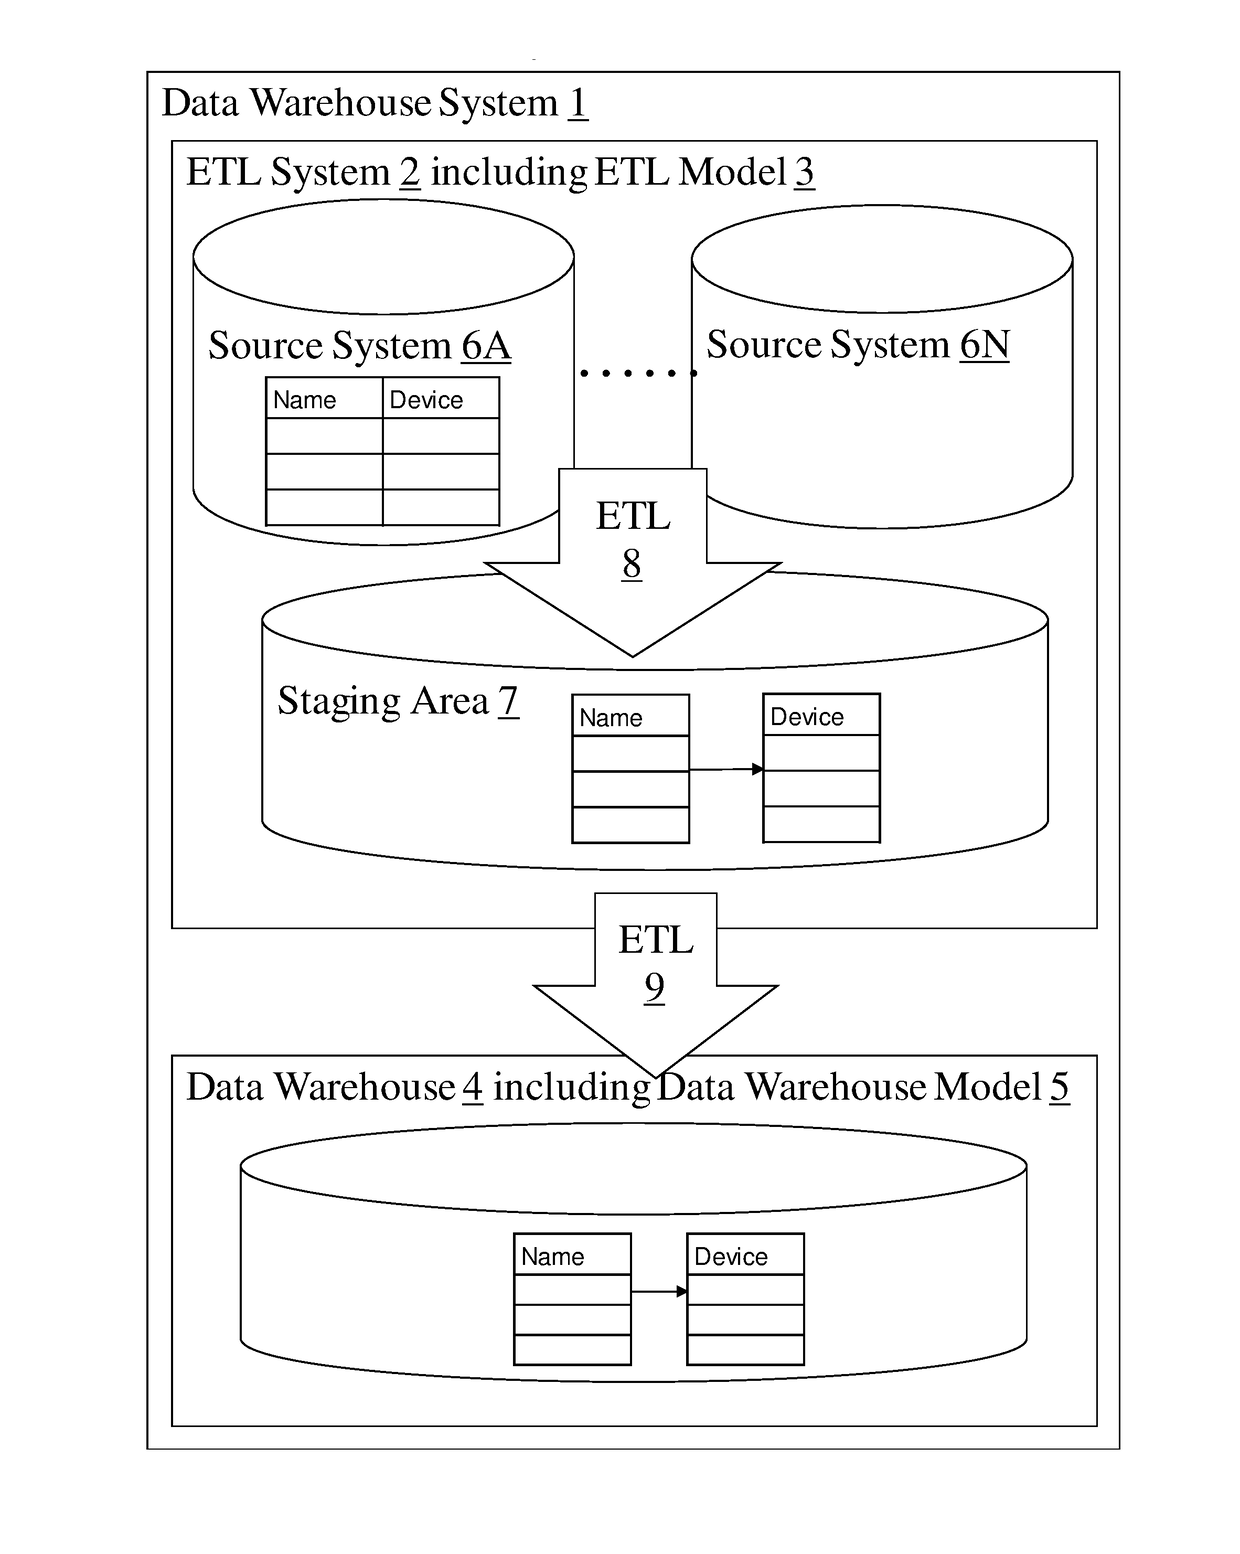 Data warehouse model validation